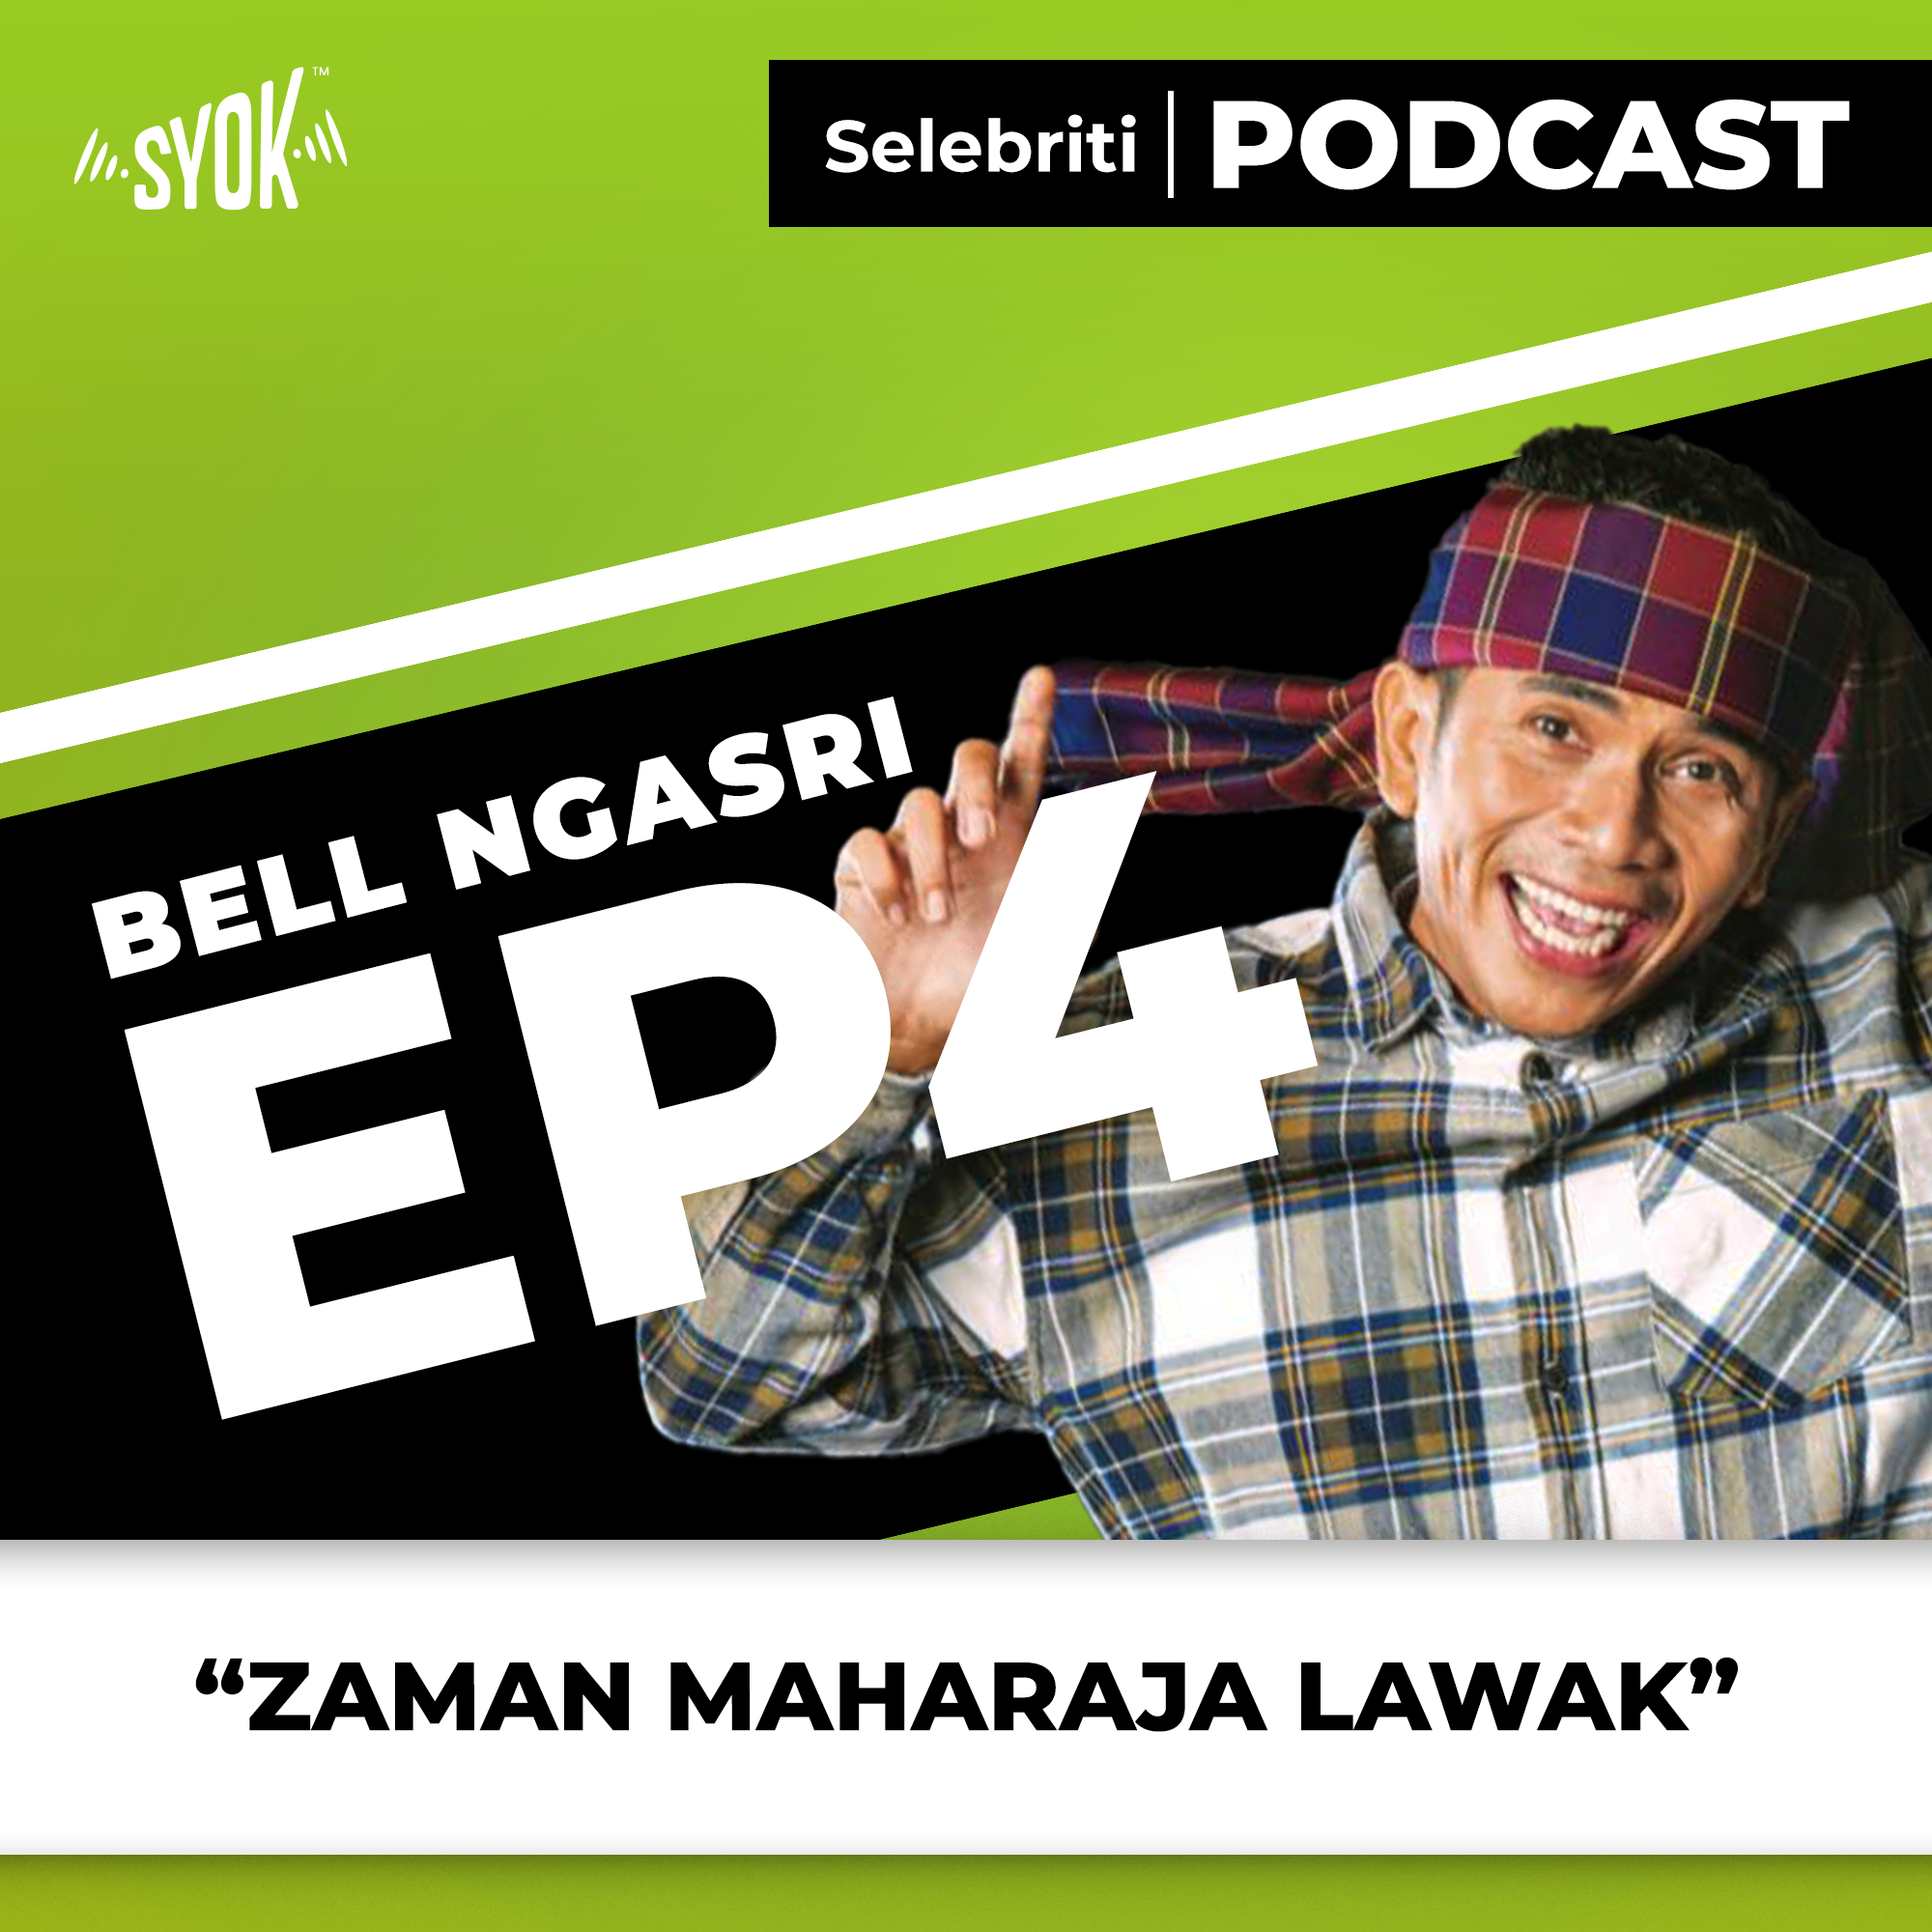 Zaman Maharaja Lawak | Selebriti Podcast Bell Ngasri EP4